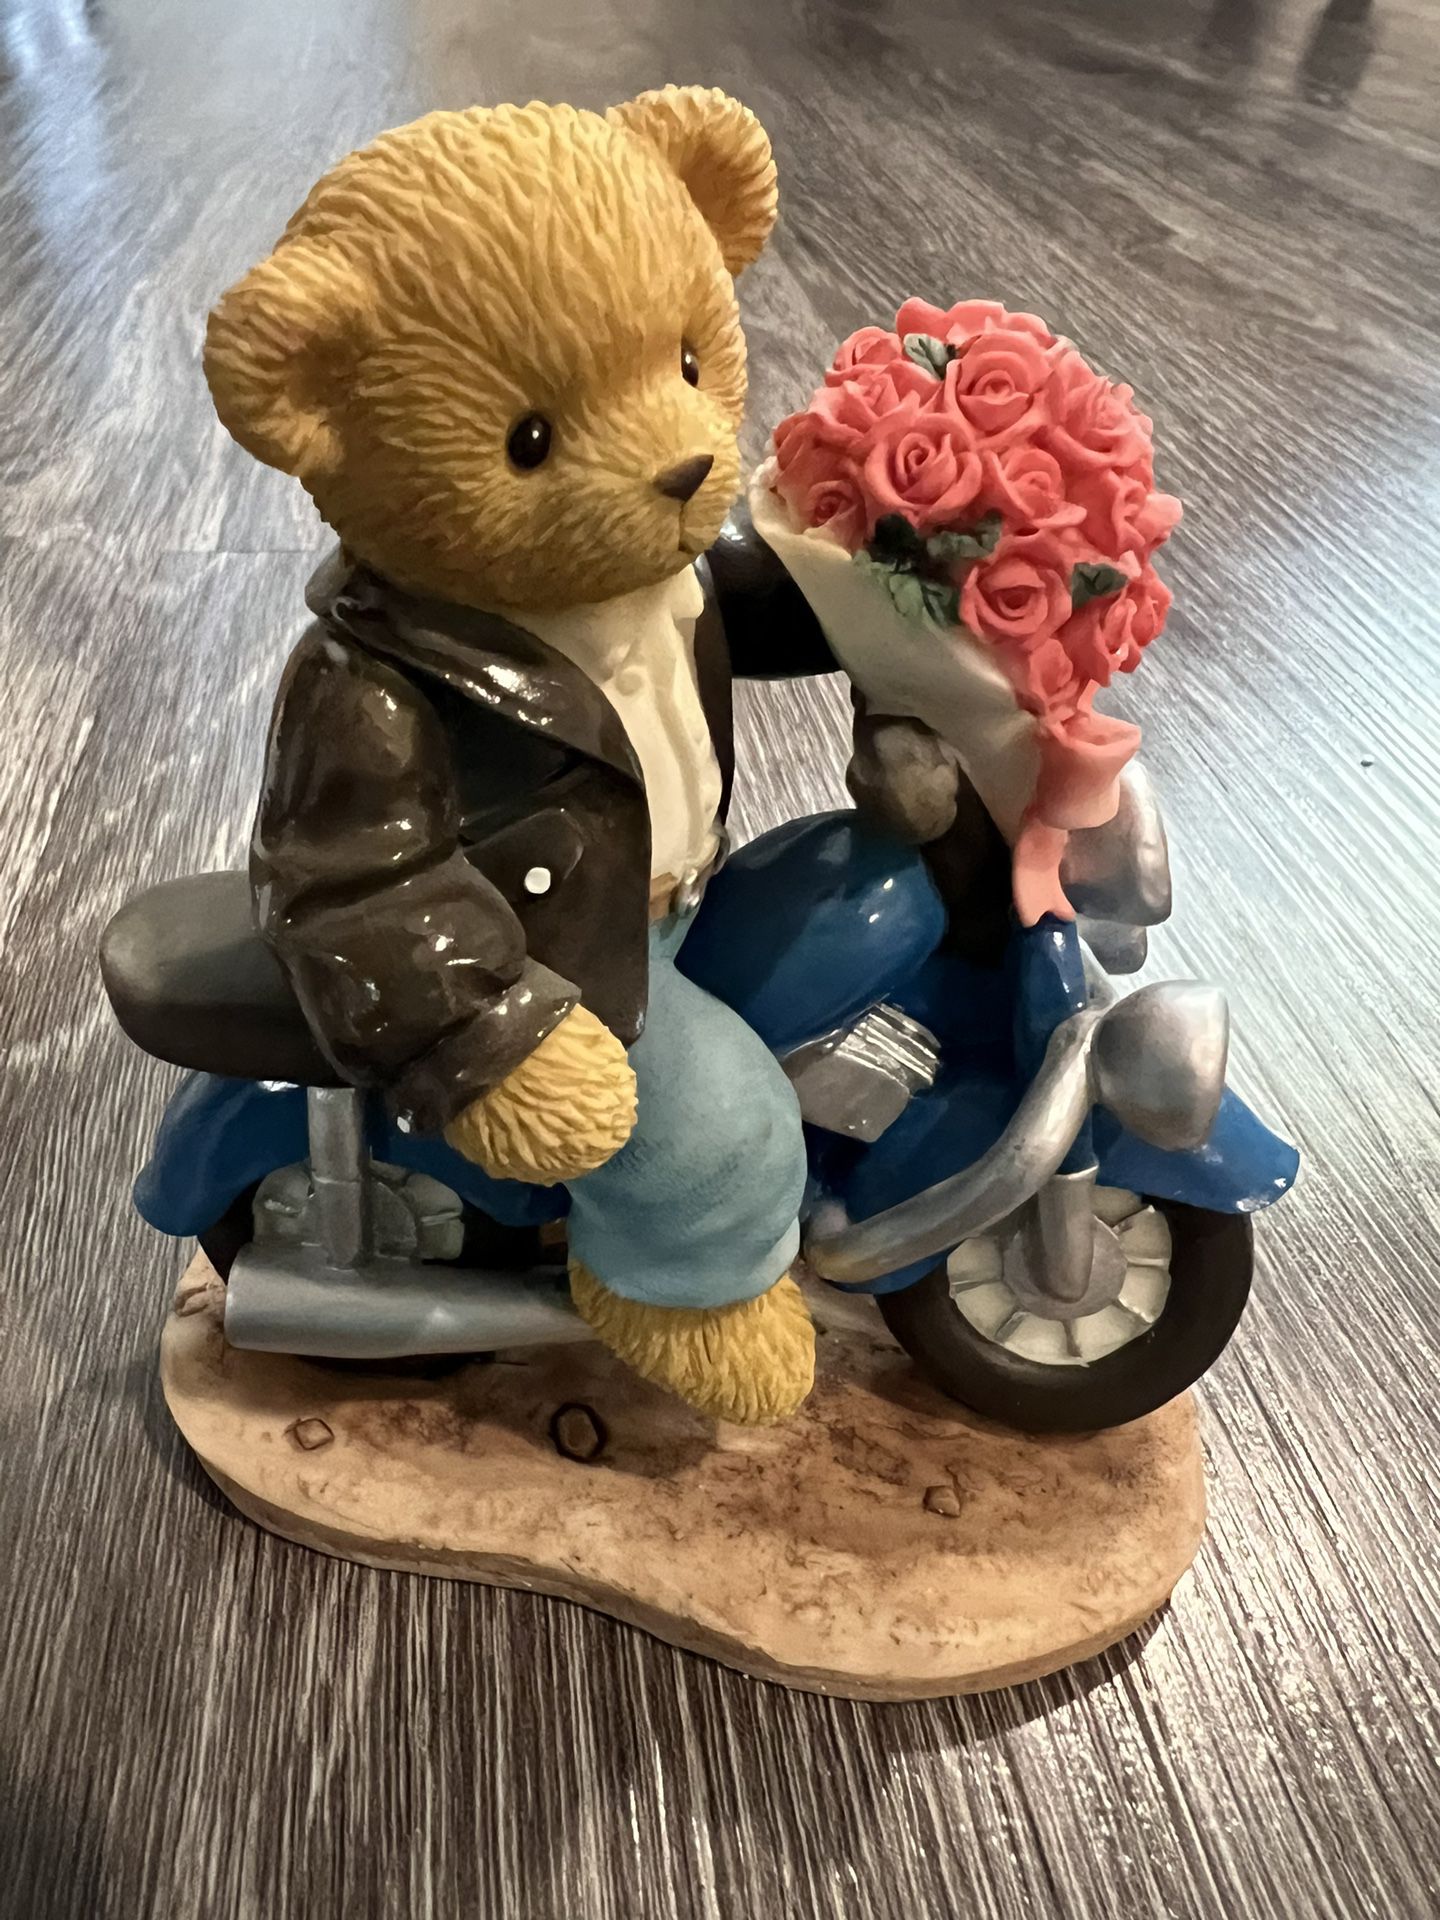 Cherished Teddies Membears Only Club 2000 Brad Wheeler “TROY MC BEAR” 685976 Figurine on Motorcycle 